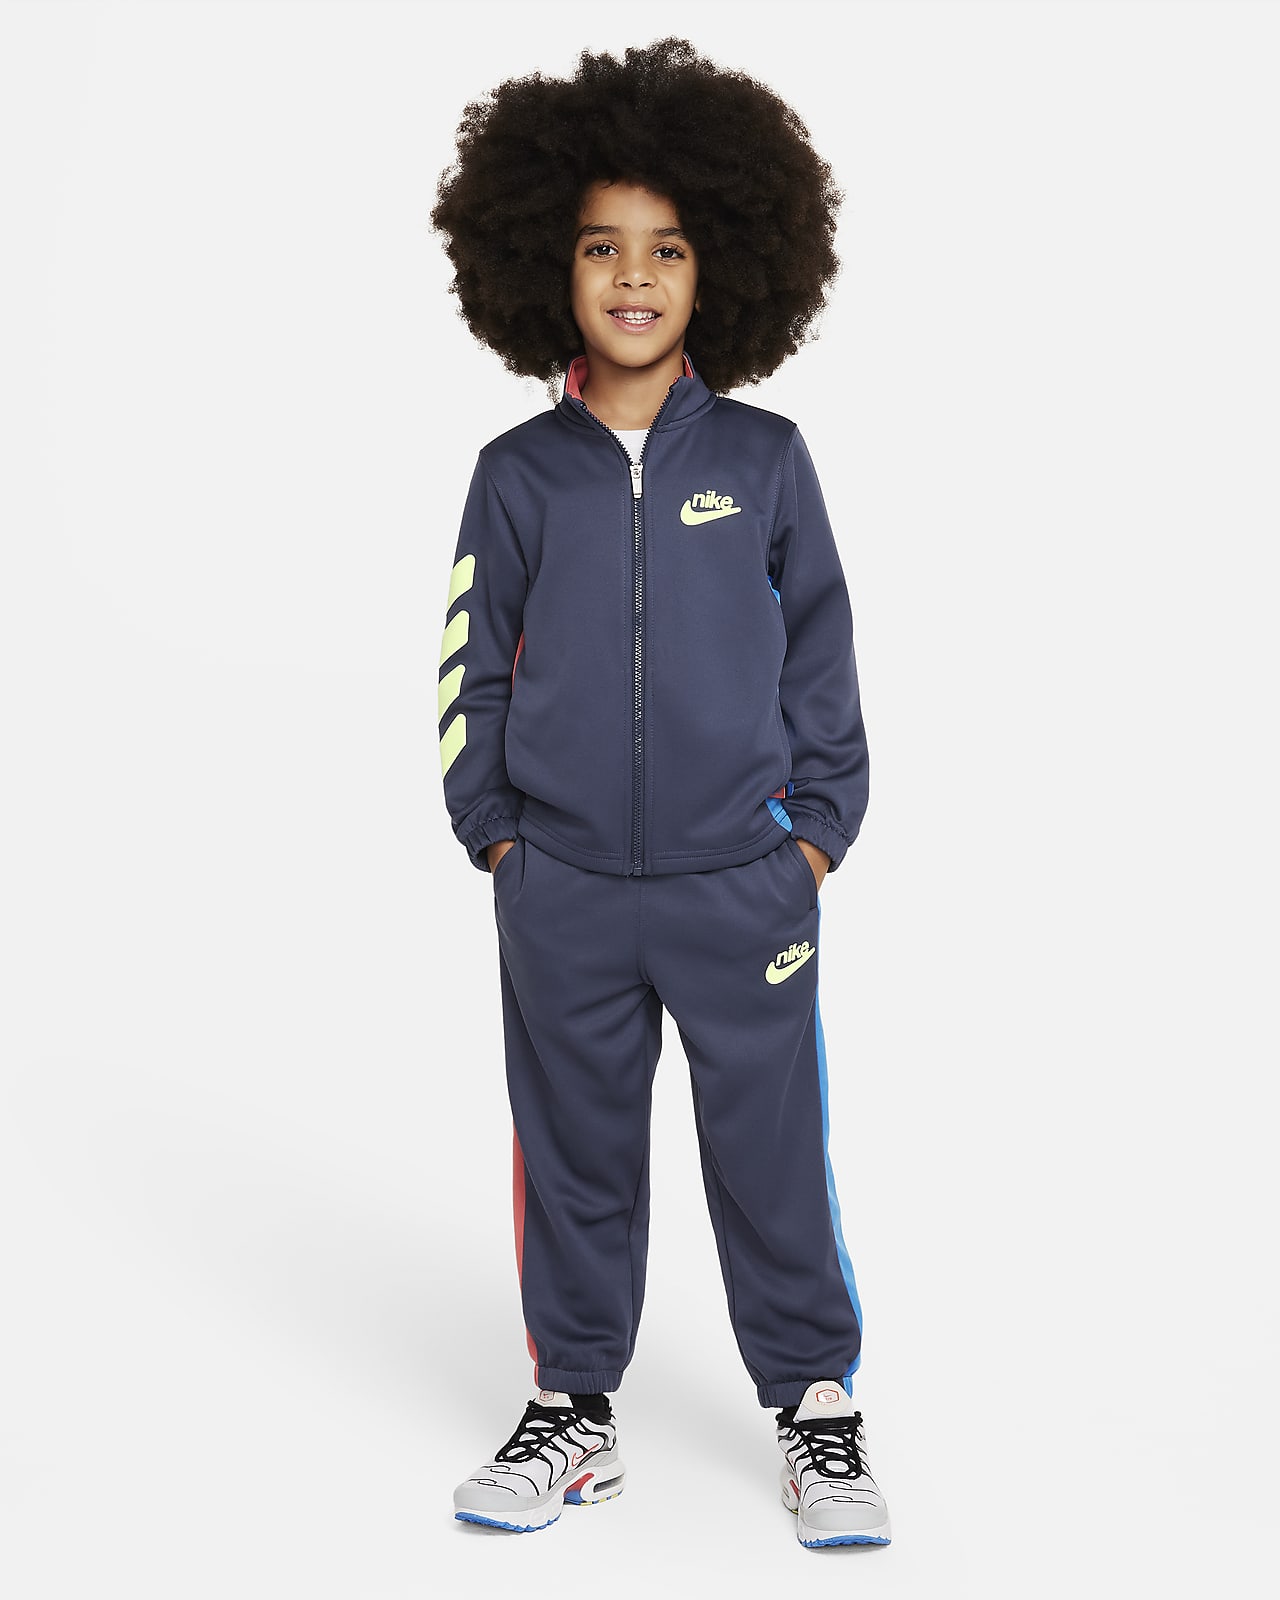 Nike Dri-FIT Colorblocked Little Kids' 2-Piece Full-Zip Set